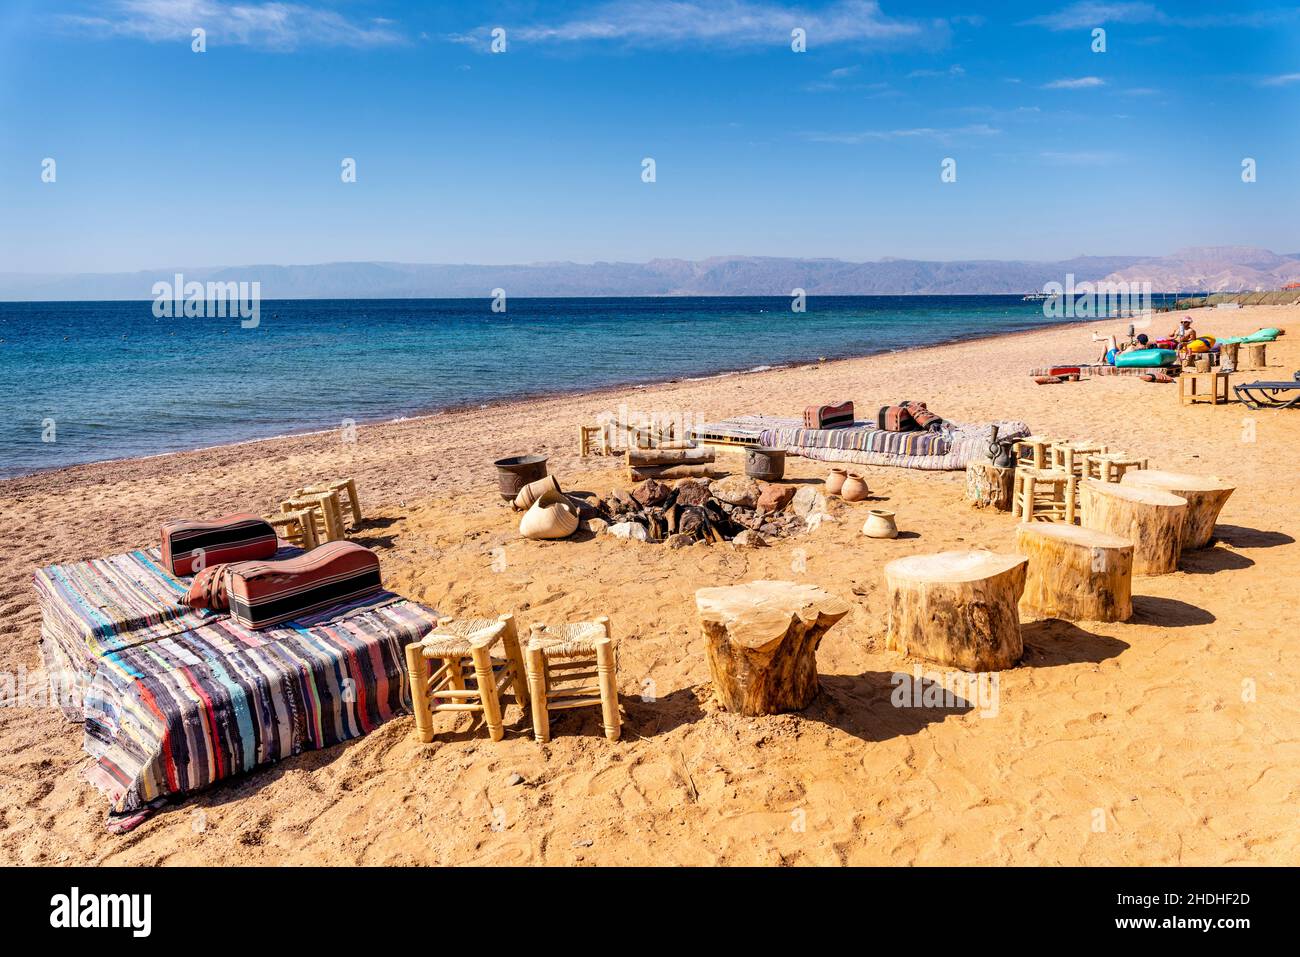 Beach resort Berenice, Aqaba, Jordan Stock Photo - Alamy